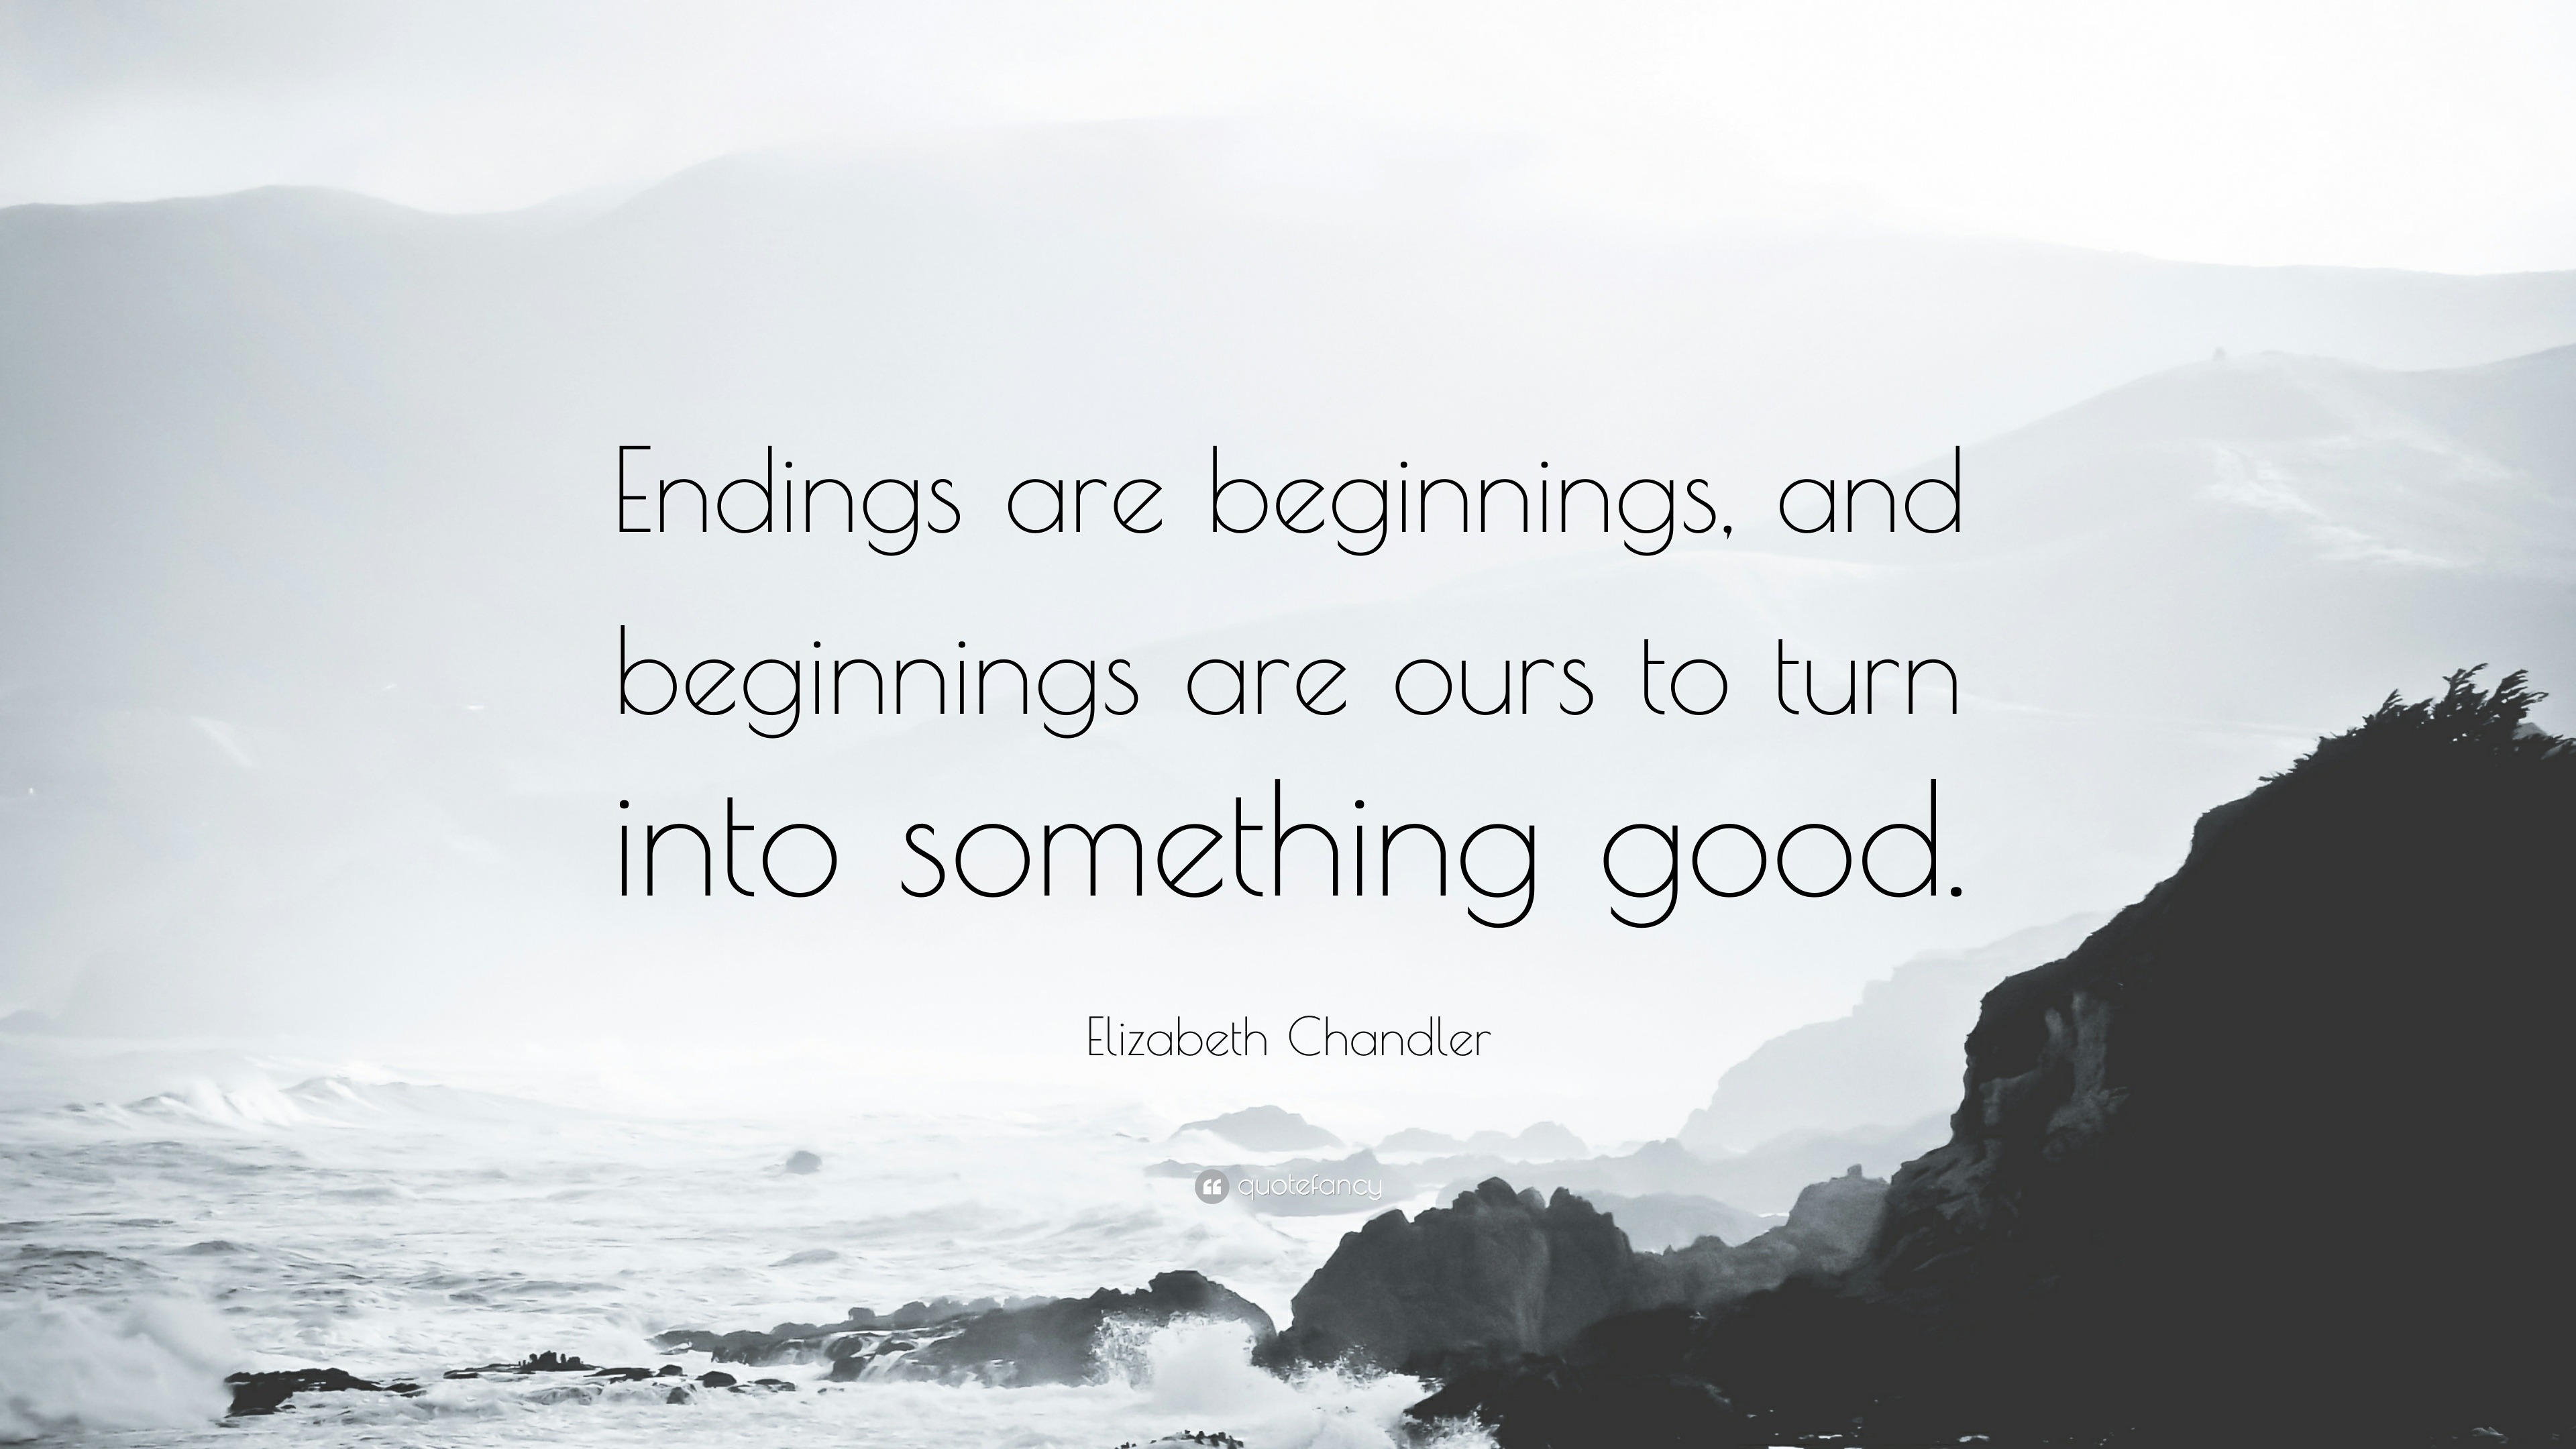 https://quotefancy.com/media/wallpaper/3840x2160/1161915-Elizabeth-Chandler-Quote-Endings-are-beginnings-and-beginnings-are.jpg